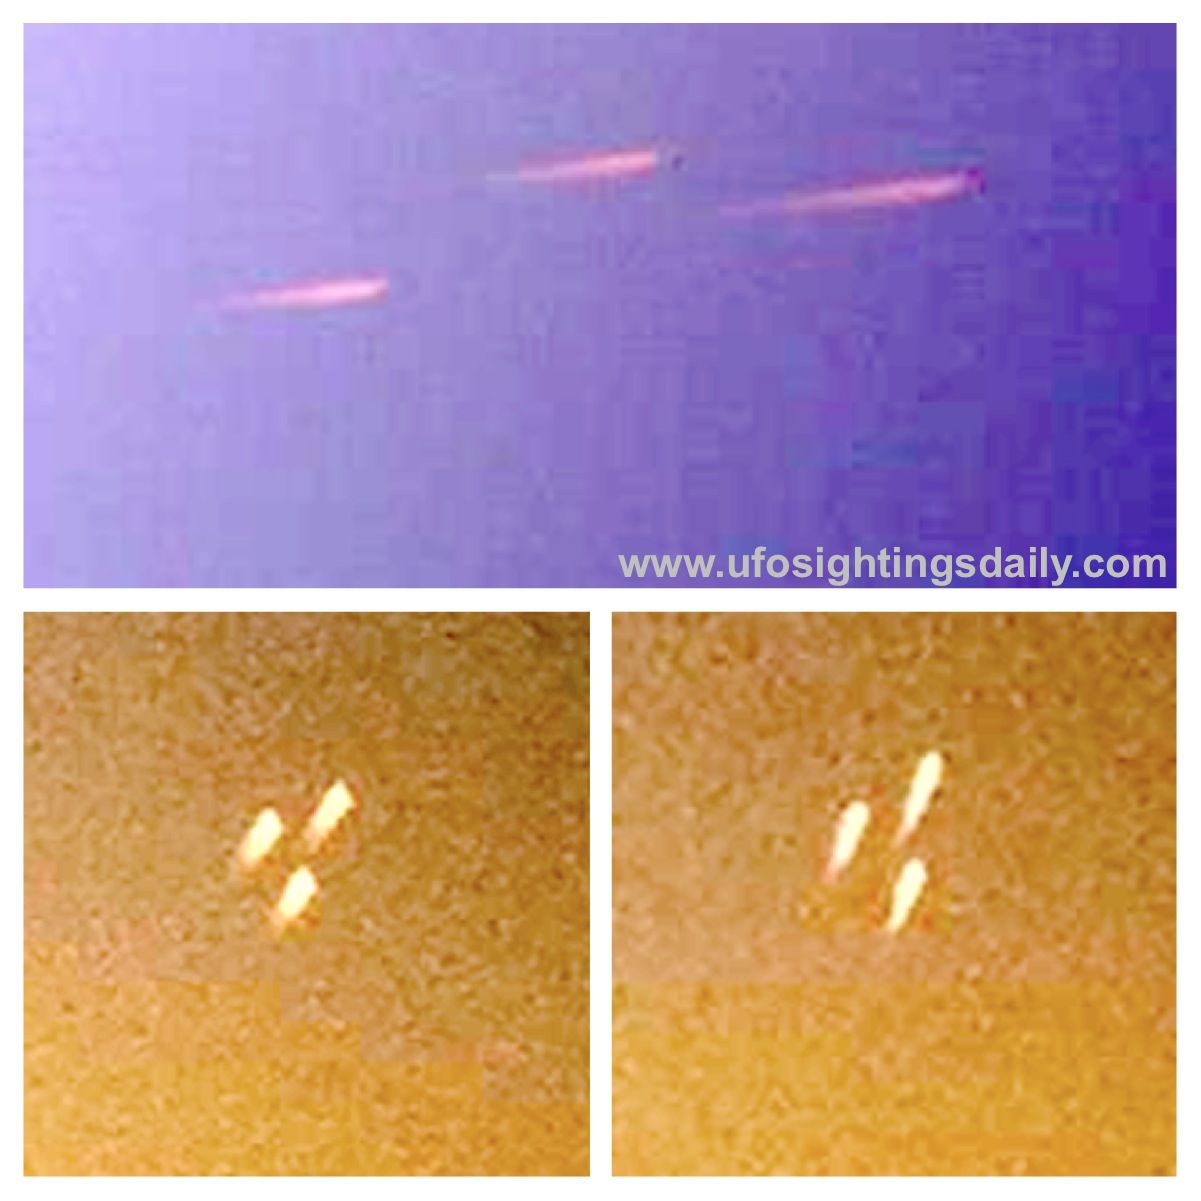 http://3.bp.blogspot.com/-mNrjK0SVNZA/UKebqzlkXsI/AAAAAAAAK1k/QXaXkV4VPhA/s1600/UFO,+UFOs,+_alien,+aliens,+UFO,+UFOs,+orb,+orbs,+space,+fire,+nasa,+top+secret,+invasion,+nov,+pennsylvania,+Apollo,+nov,+2012,+paranormal,+angel,+angels,+god,+spirit,+Angelina+Jolie.jpg